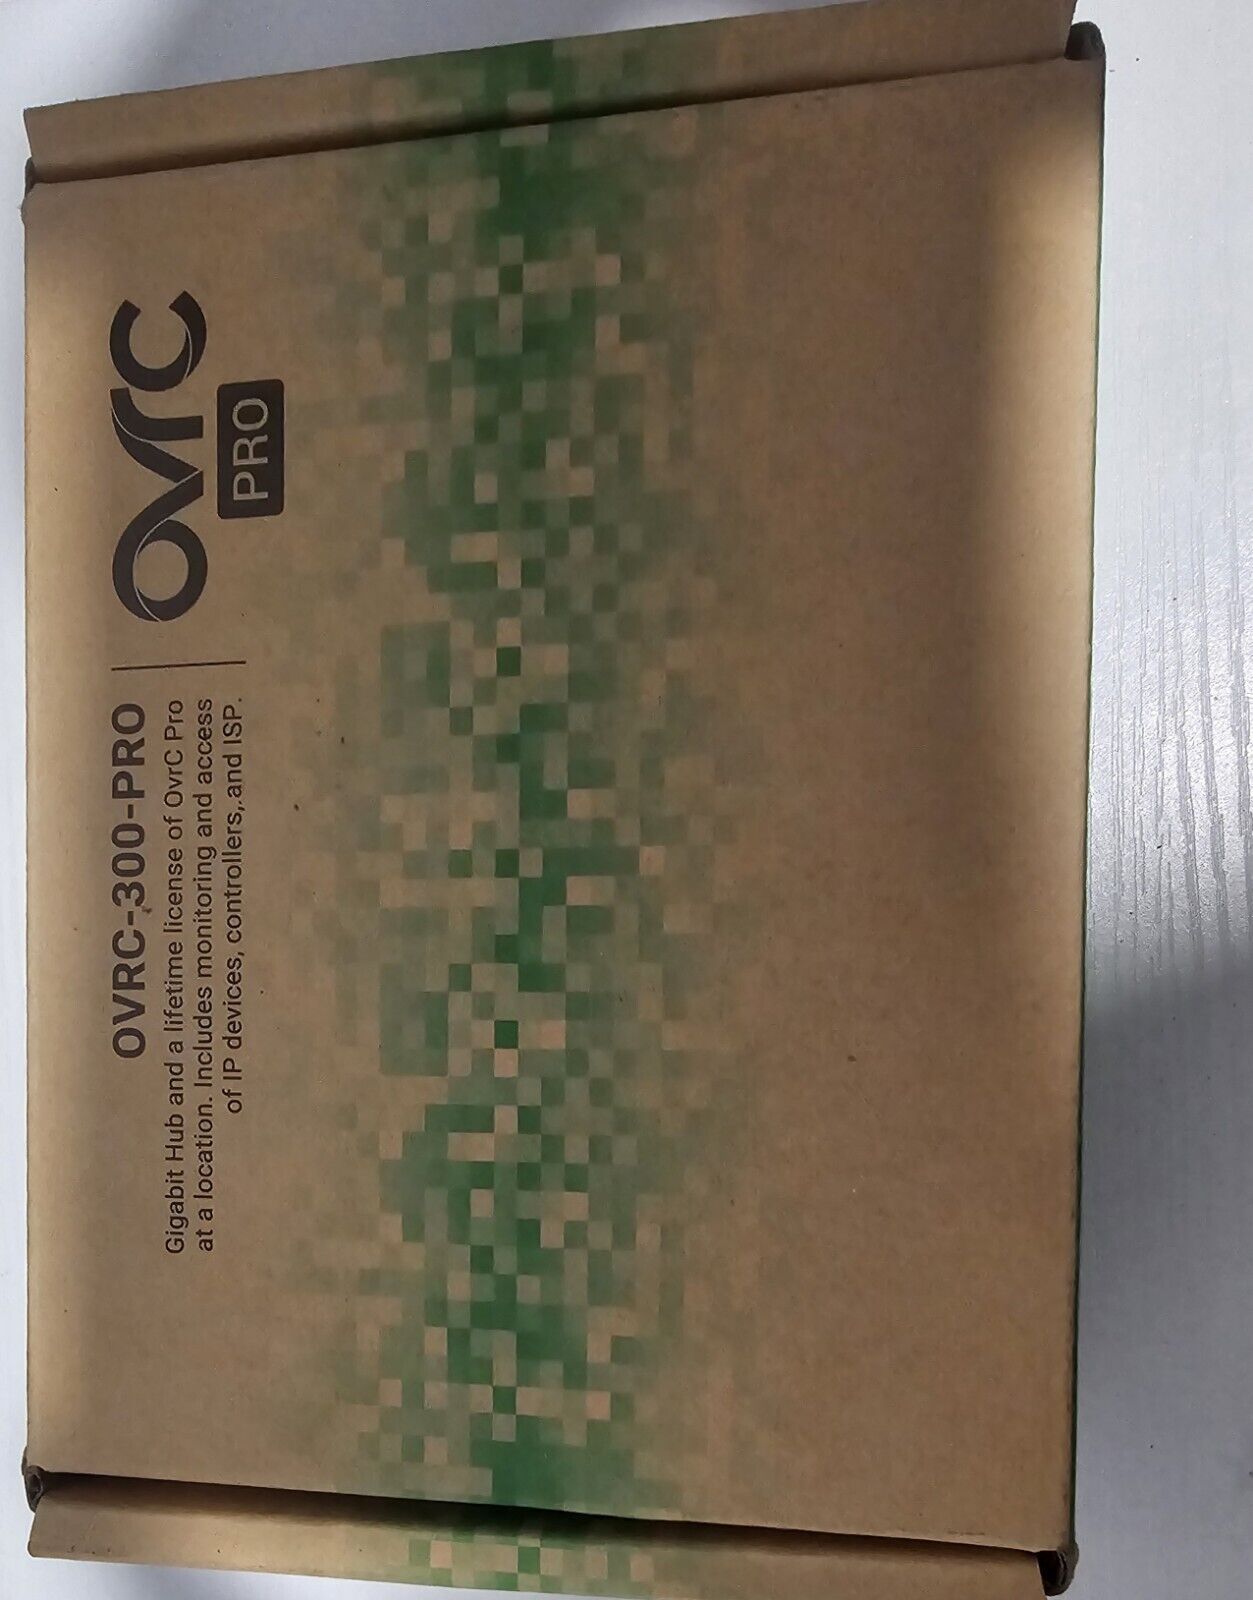 OvrC Pro Lifetime License AND OVRC-300-PRO Gigabit Hub - New in Box